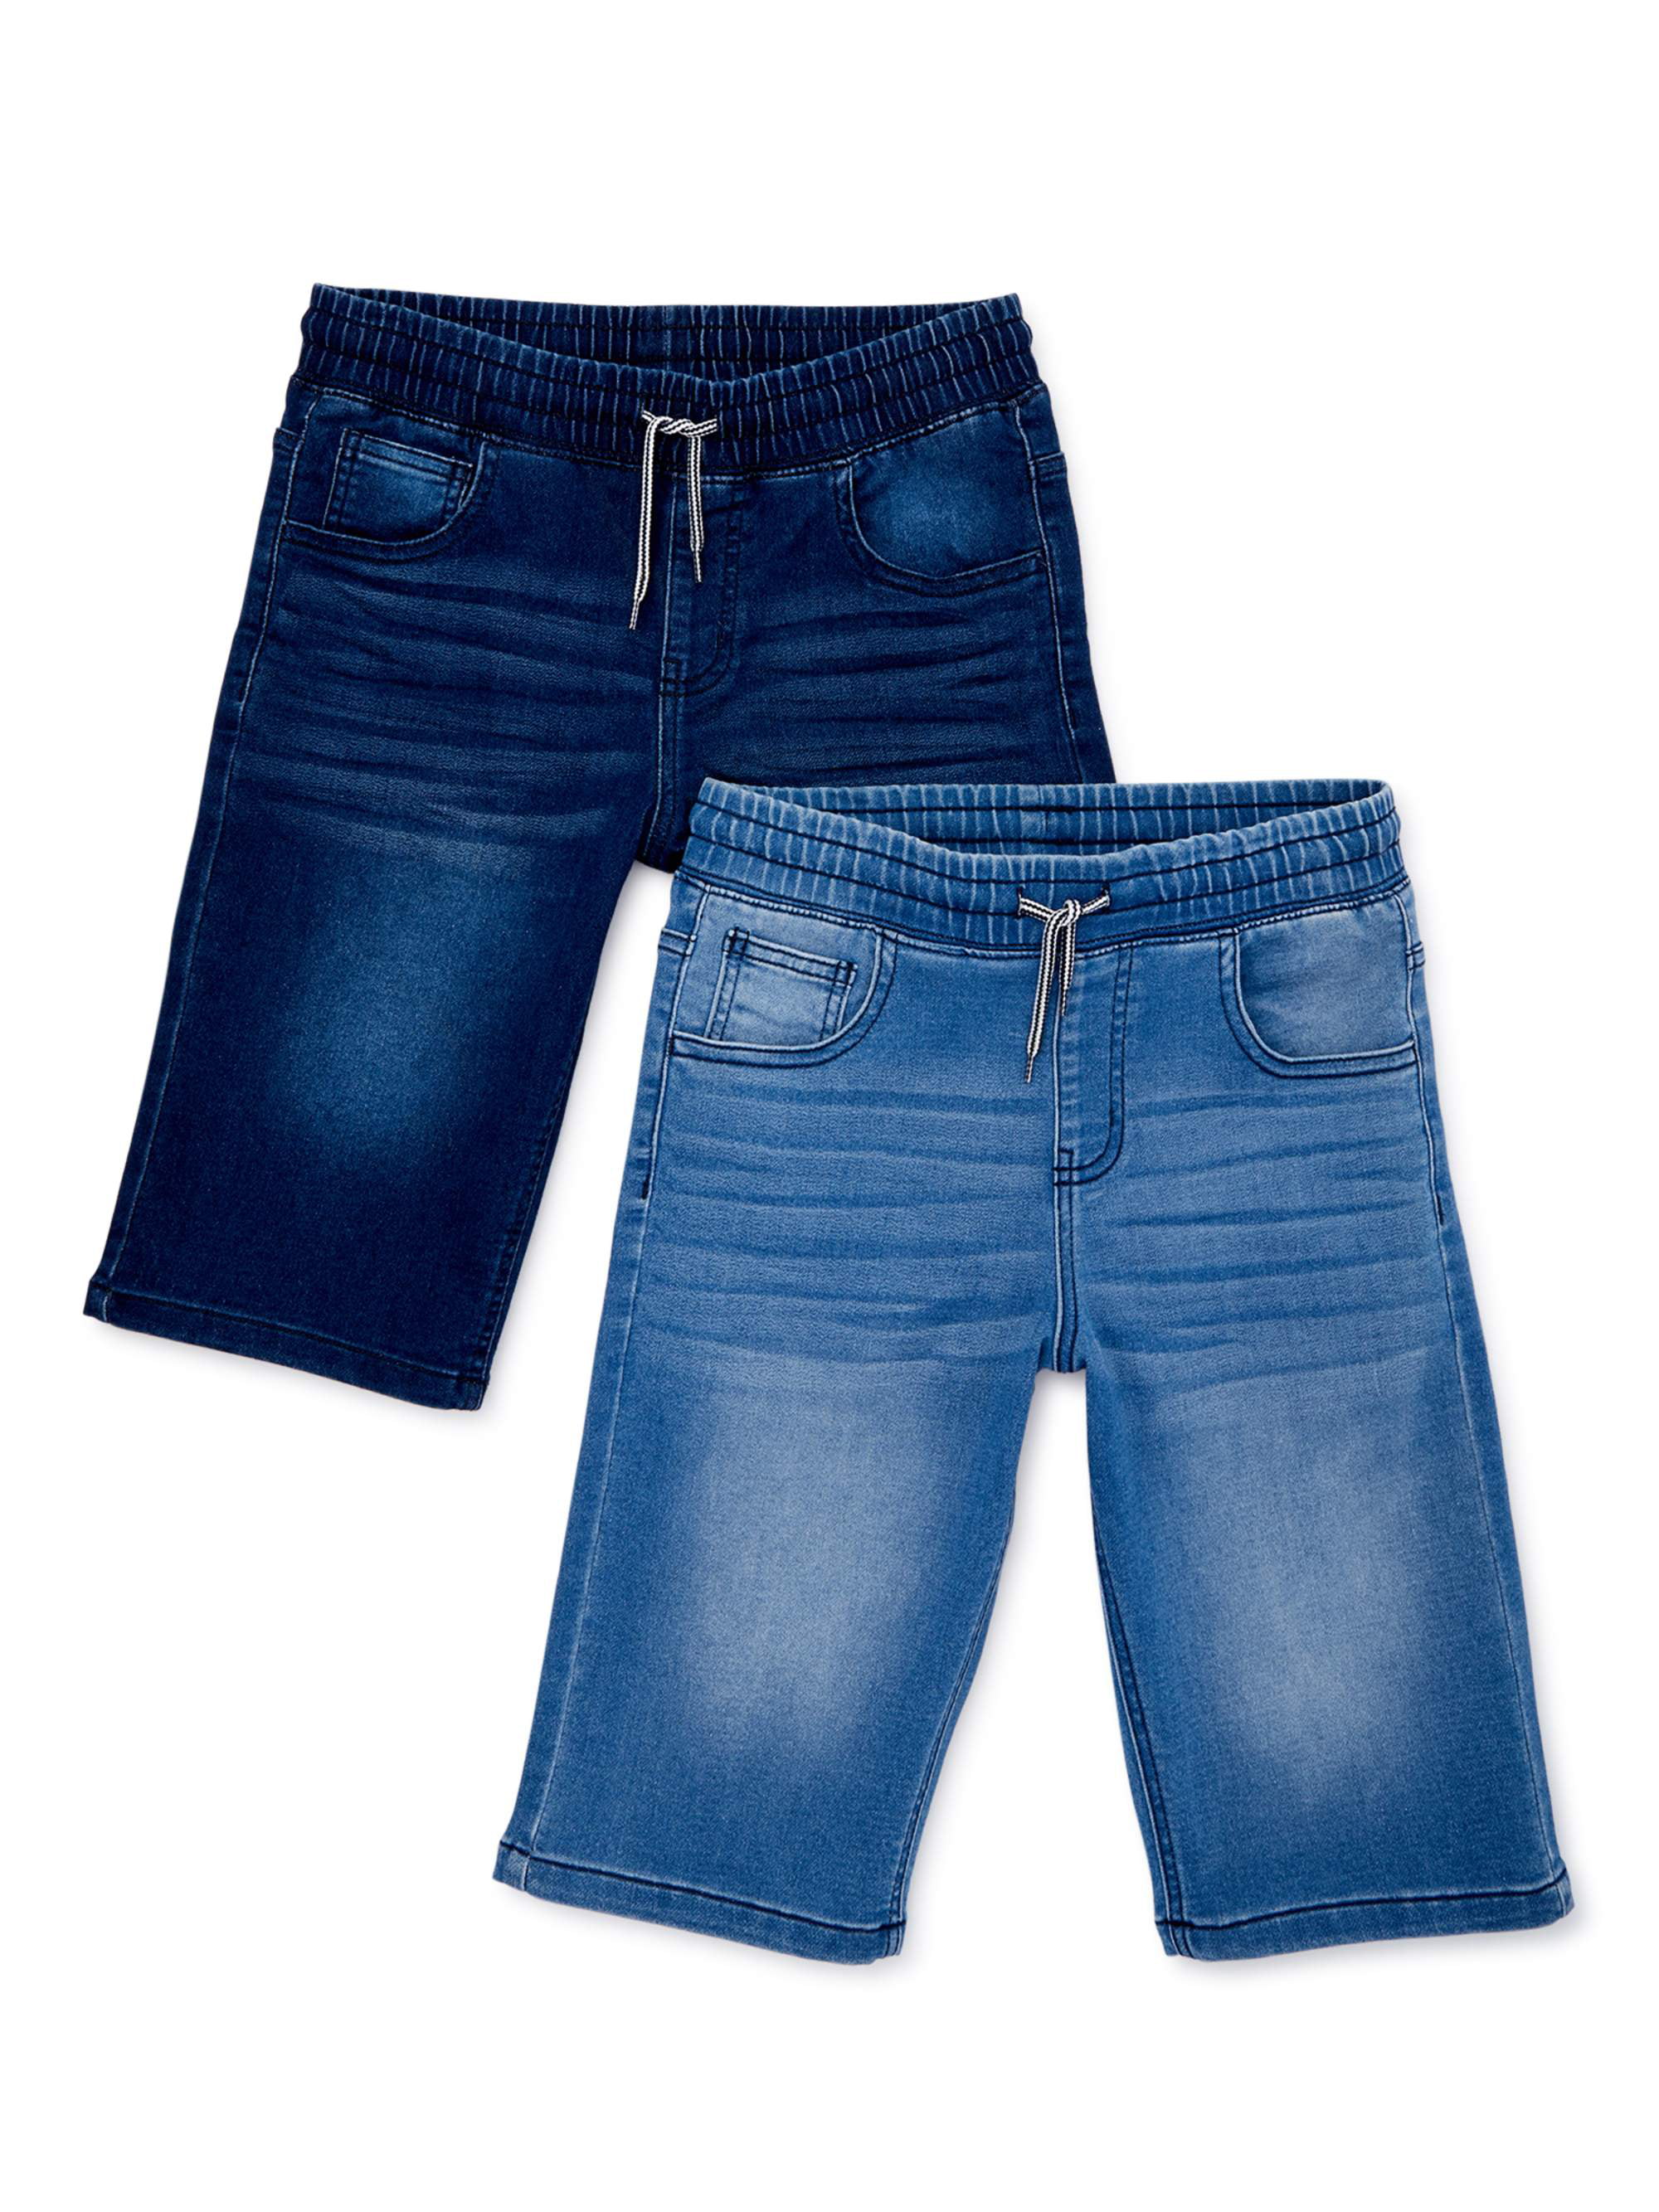 Mallimoda Boys Casual Jeans Pull-On Shorts Denim Elastic Waist